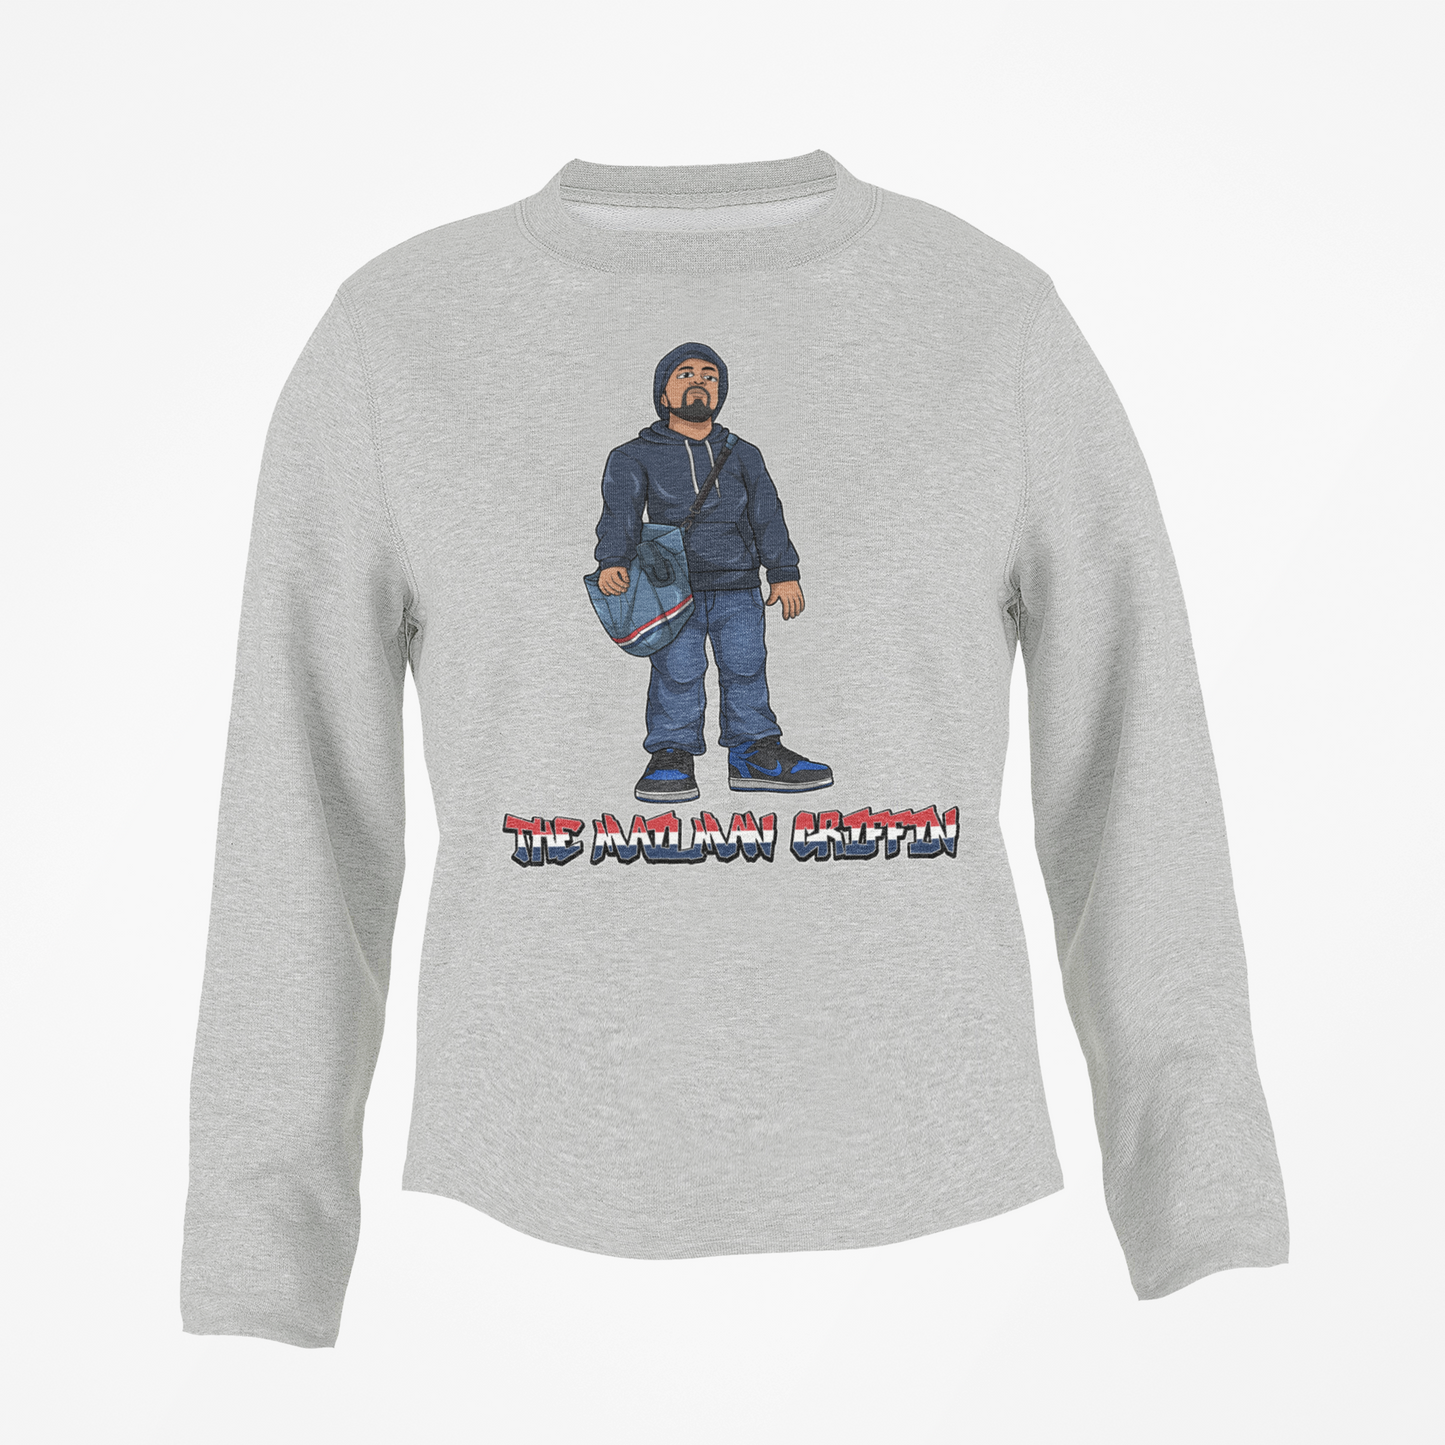 The Postal man Sweatshirt